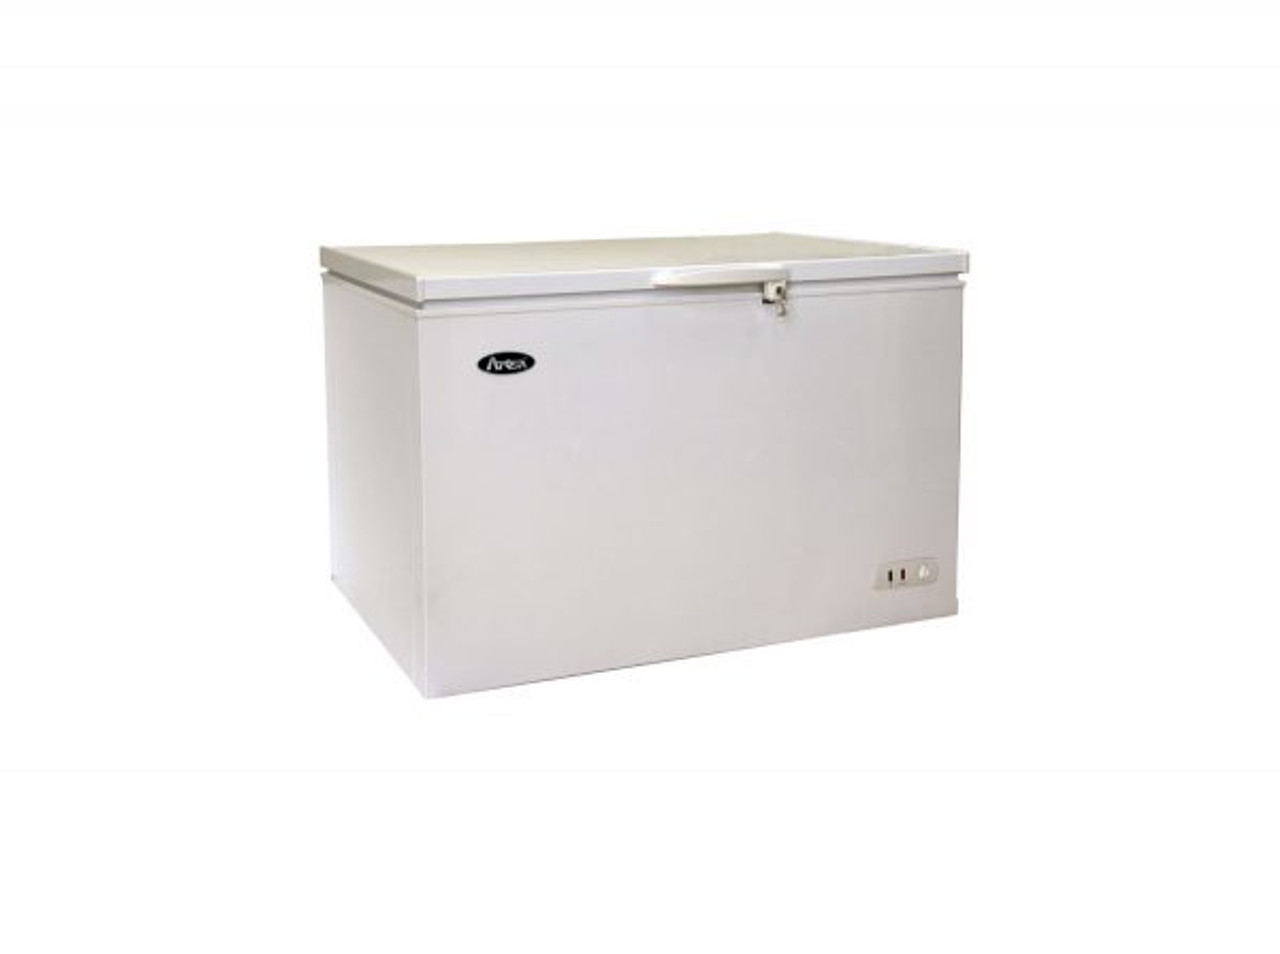 Rome -Restaurant Equipment - ATOSA MWF-9010 Solid Top Chest Freezer-10 Cu.Ft